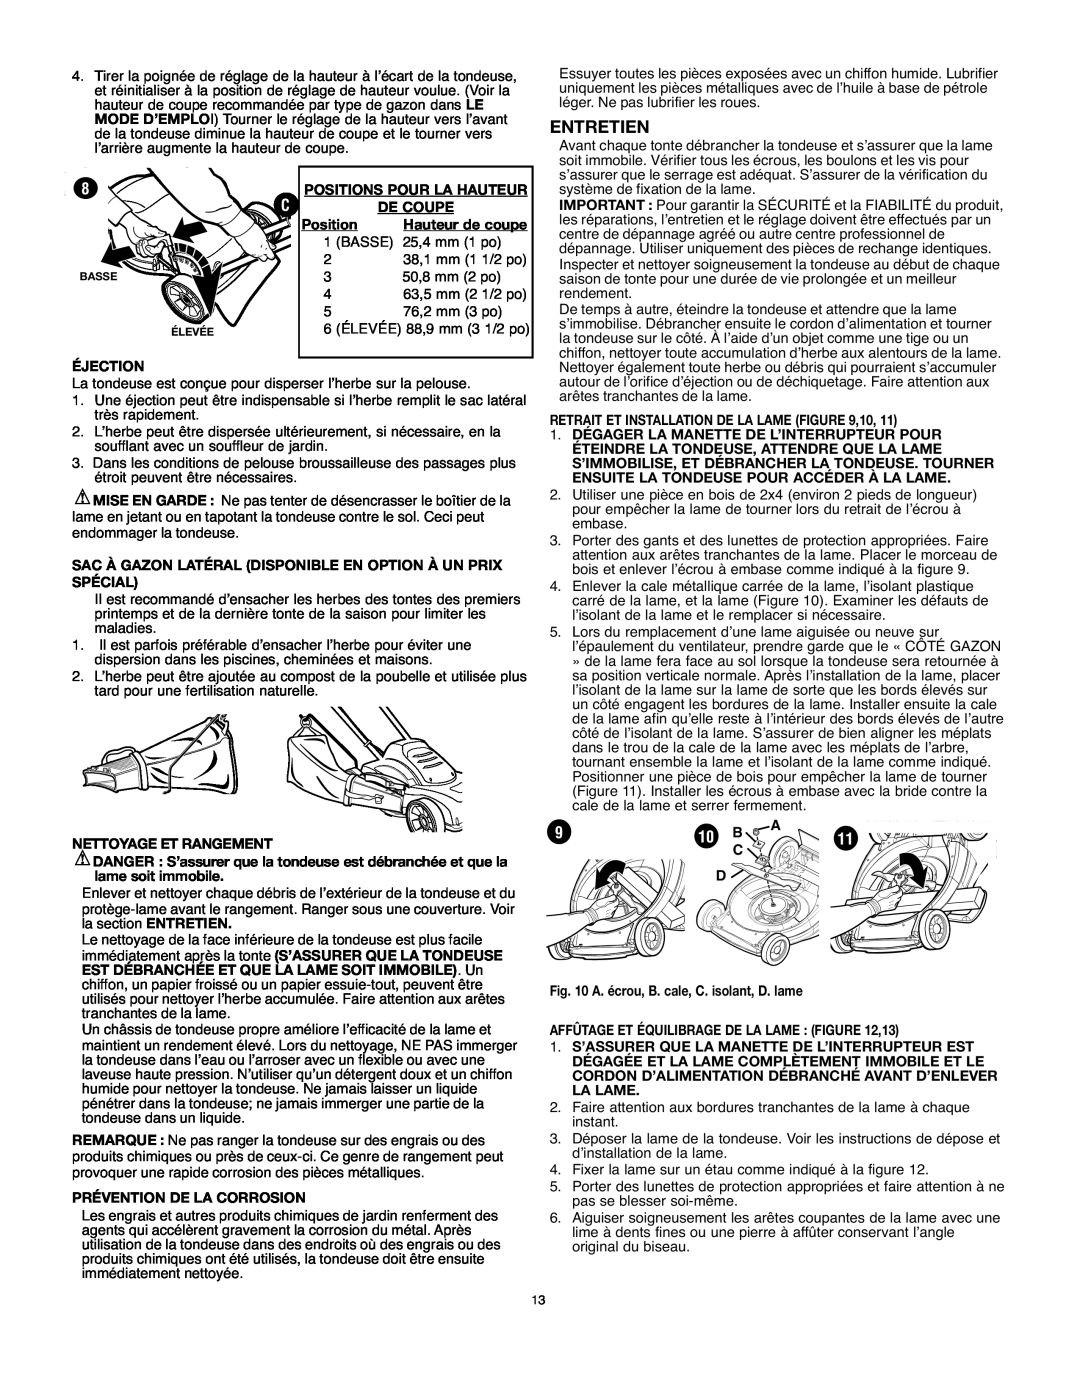 Black & Decker LM175 instruction manual Entretien, 10 B 